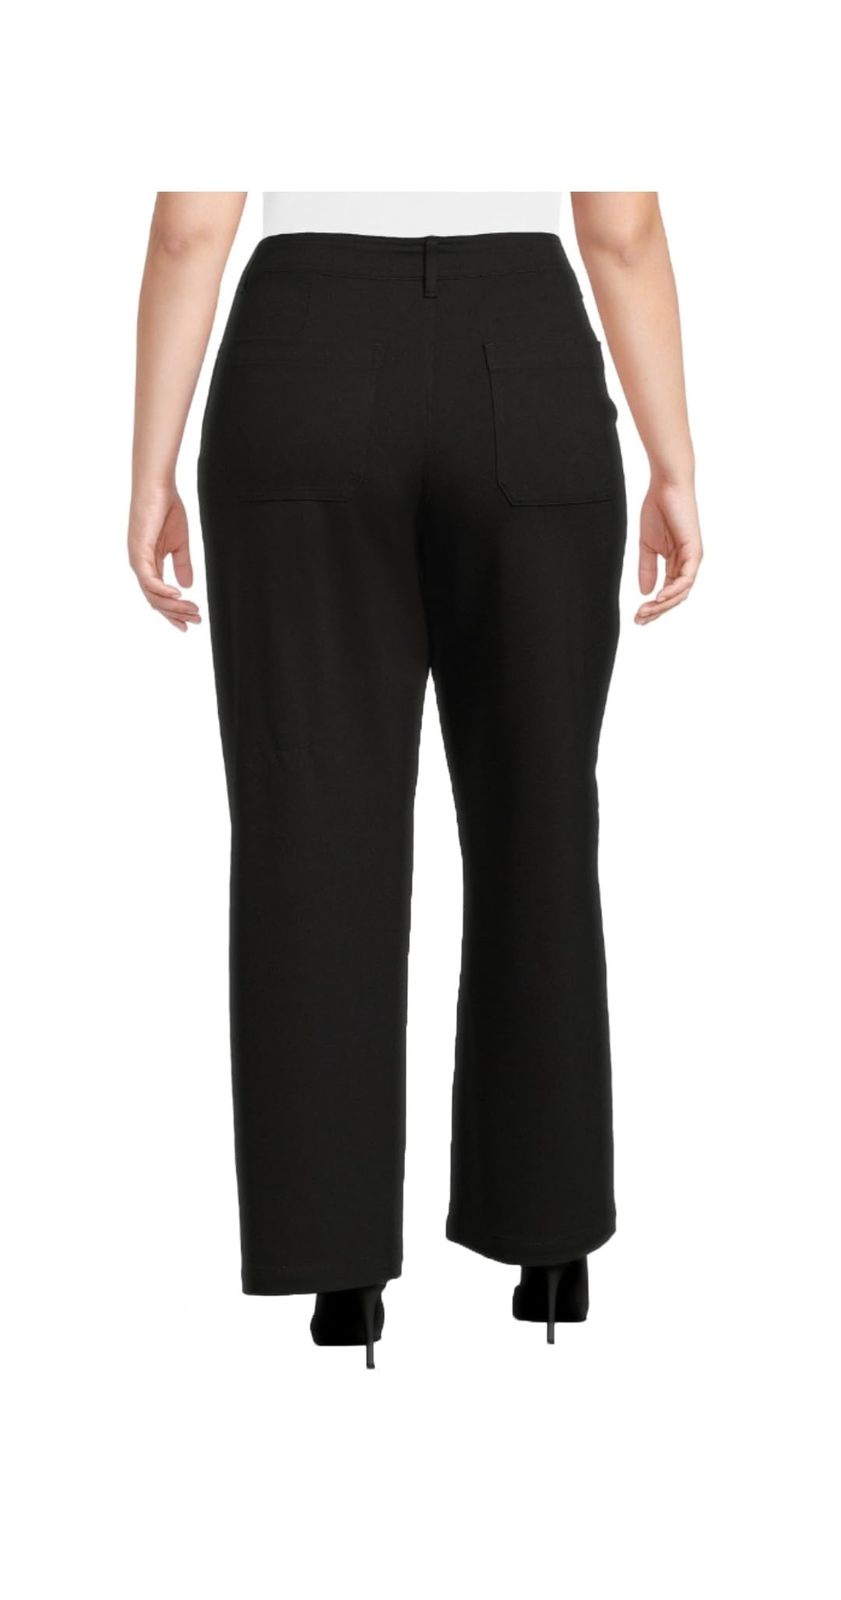 Terra & Sky Women's Plus Size Dress Pants and similar items